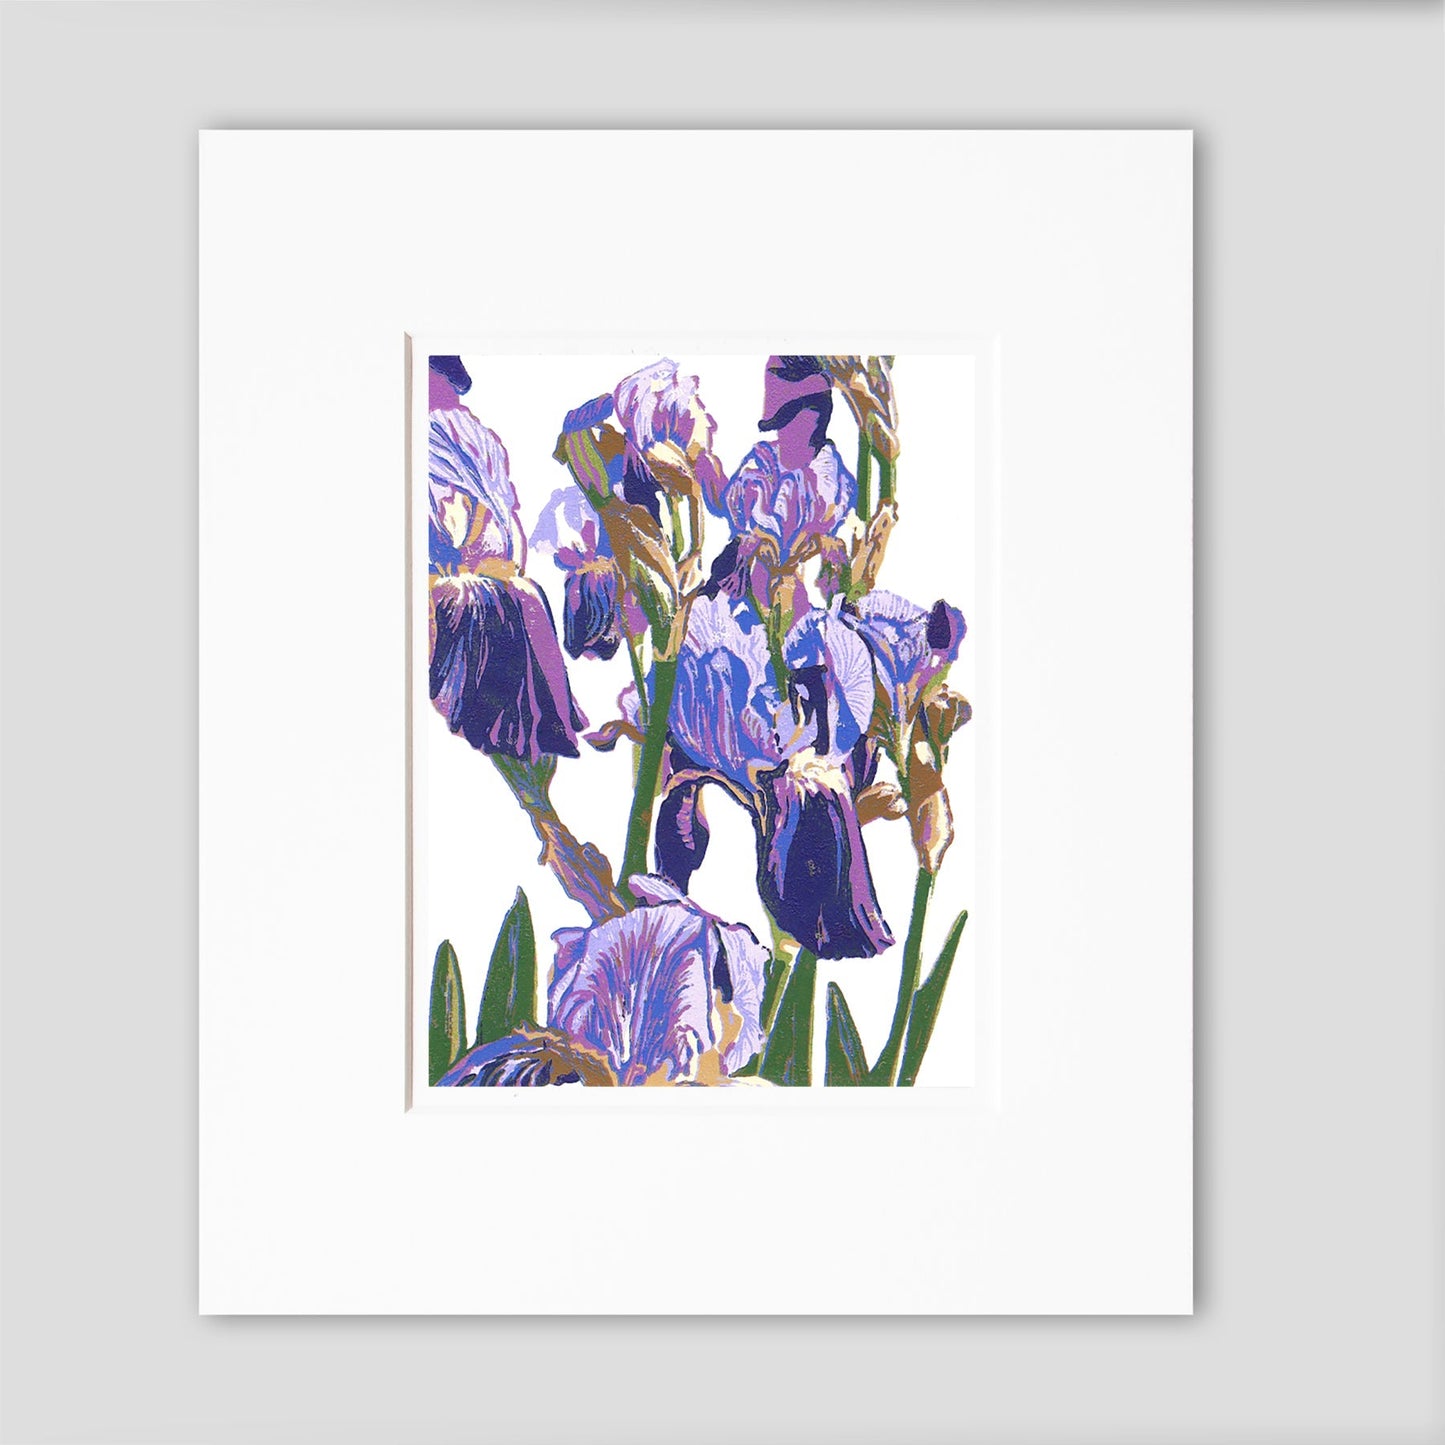 Purple Iris art by Michigan printmaker Natalia Wohletz of Peninsula Prints in Milford and Mackinac Island.